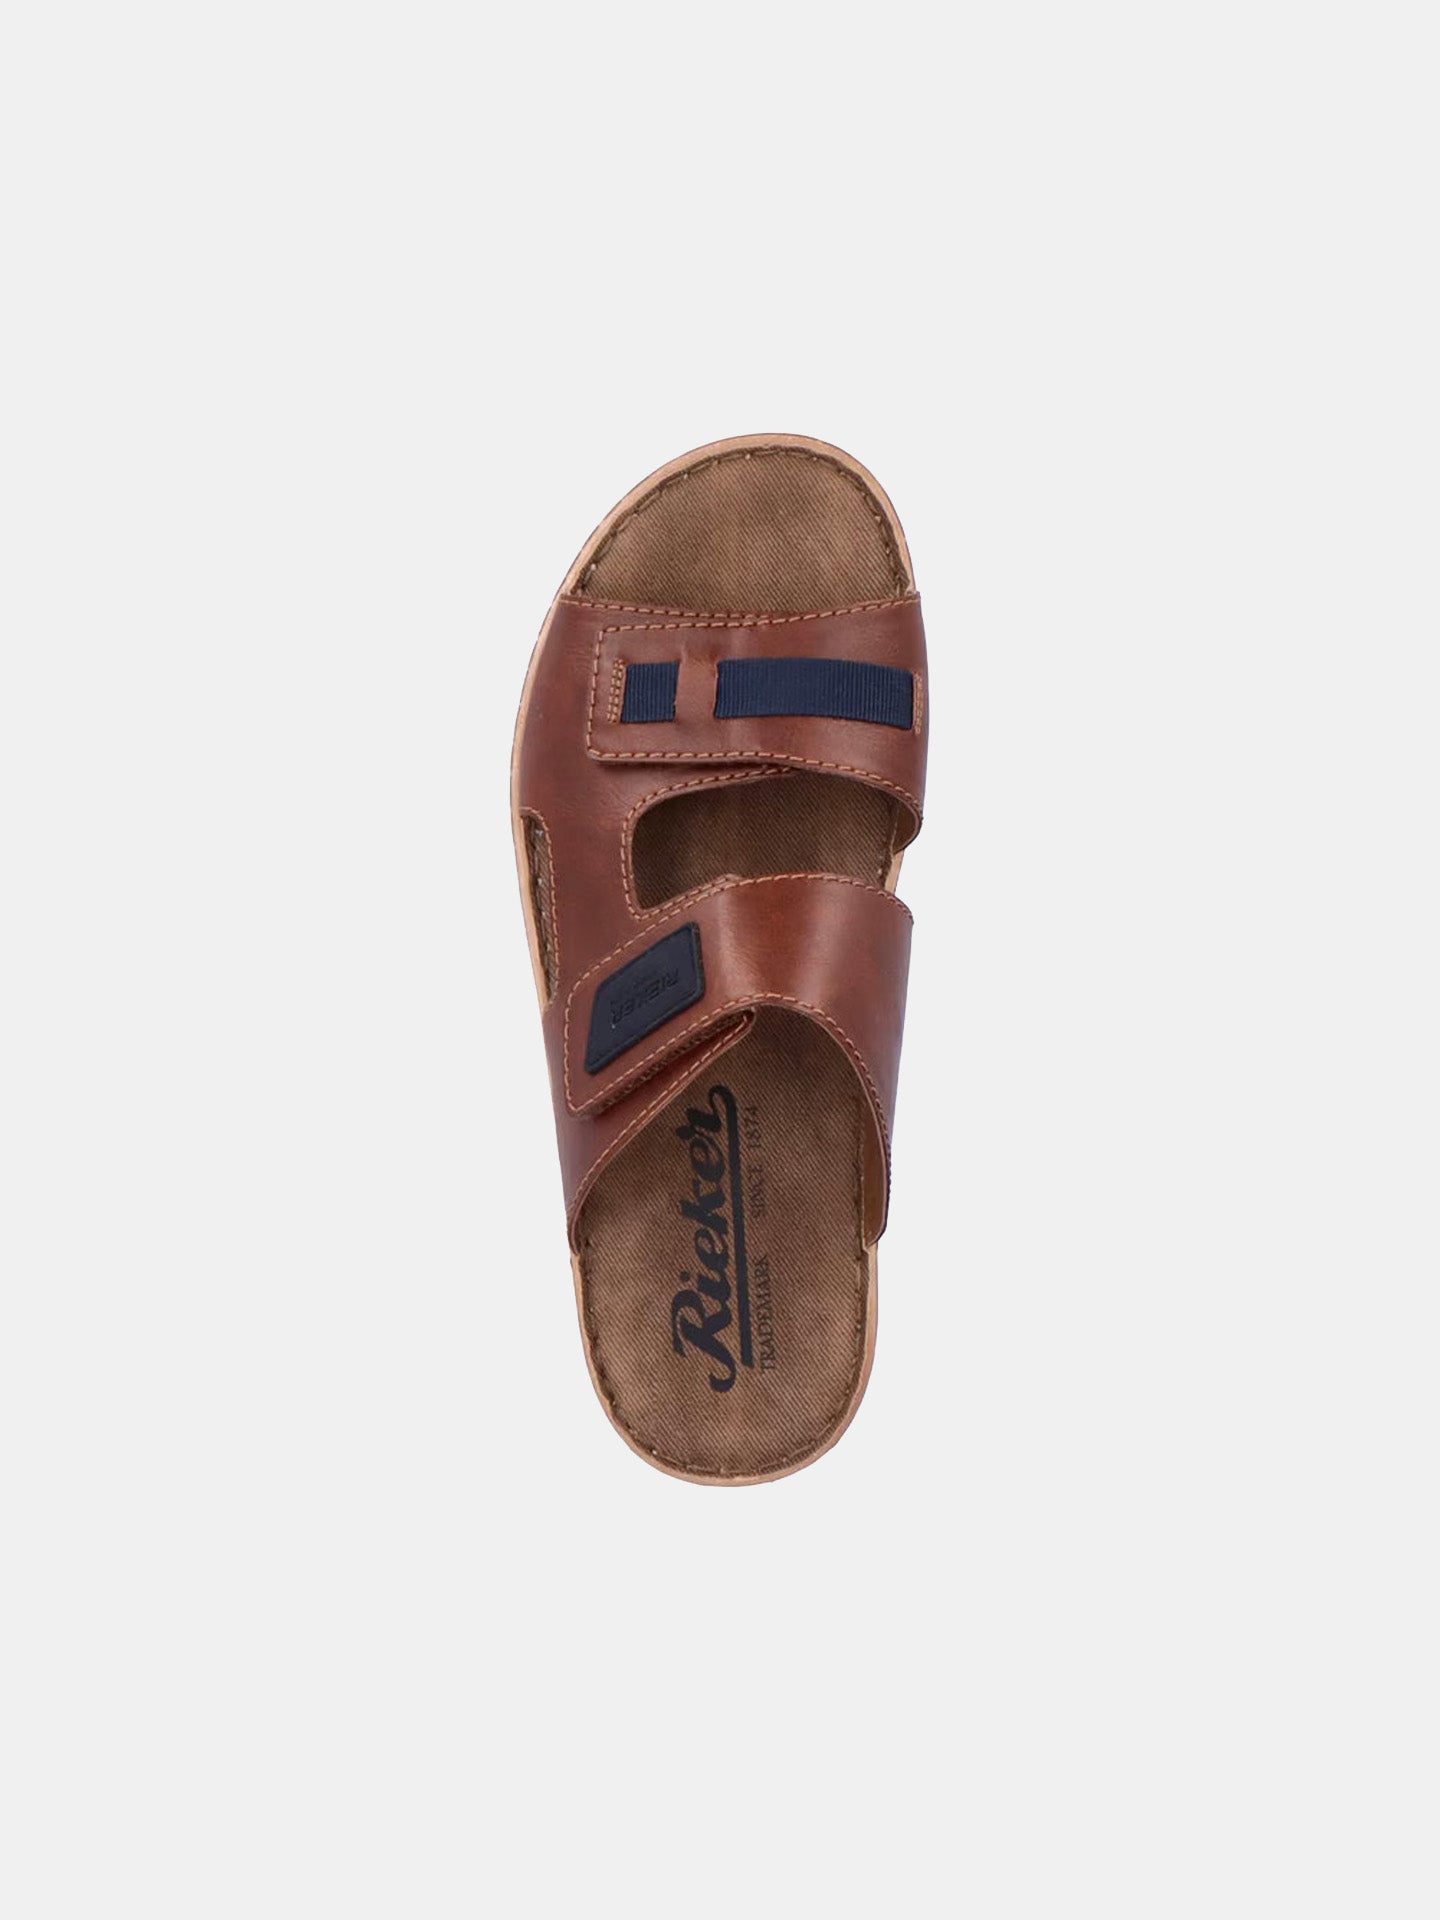 Rieker 21055 Men's Slider Sandals